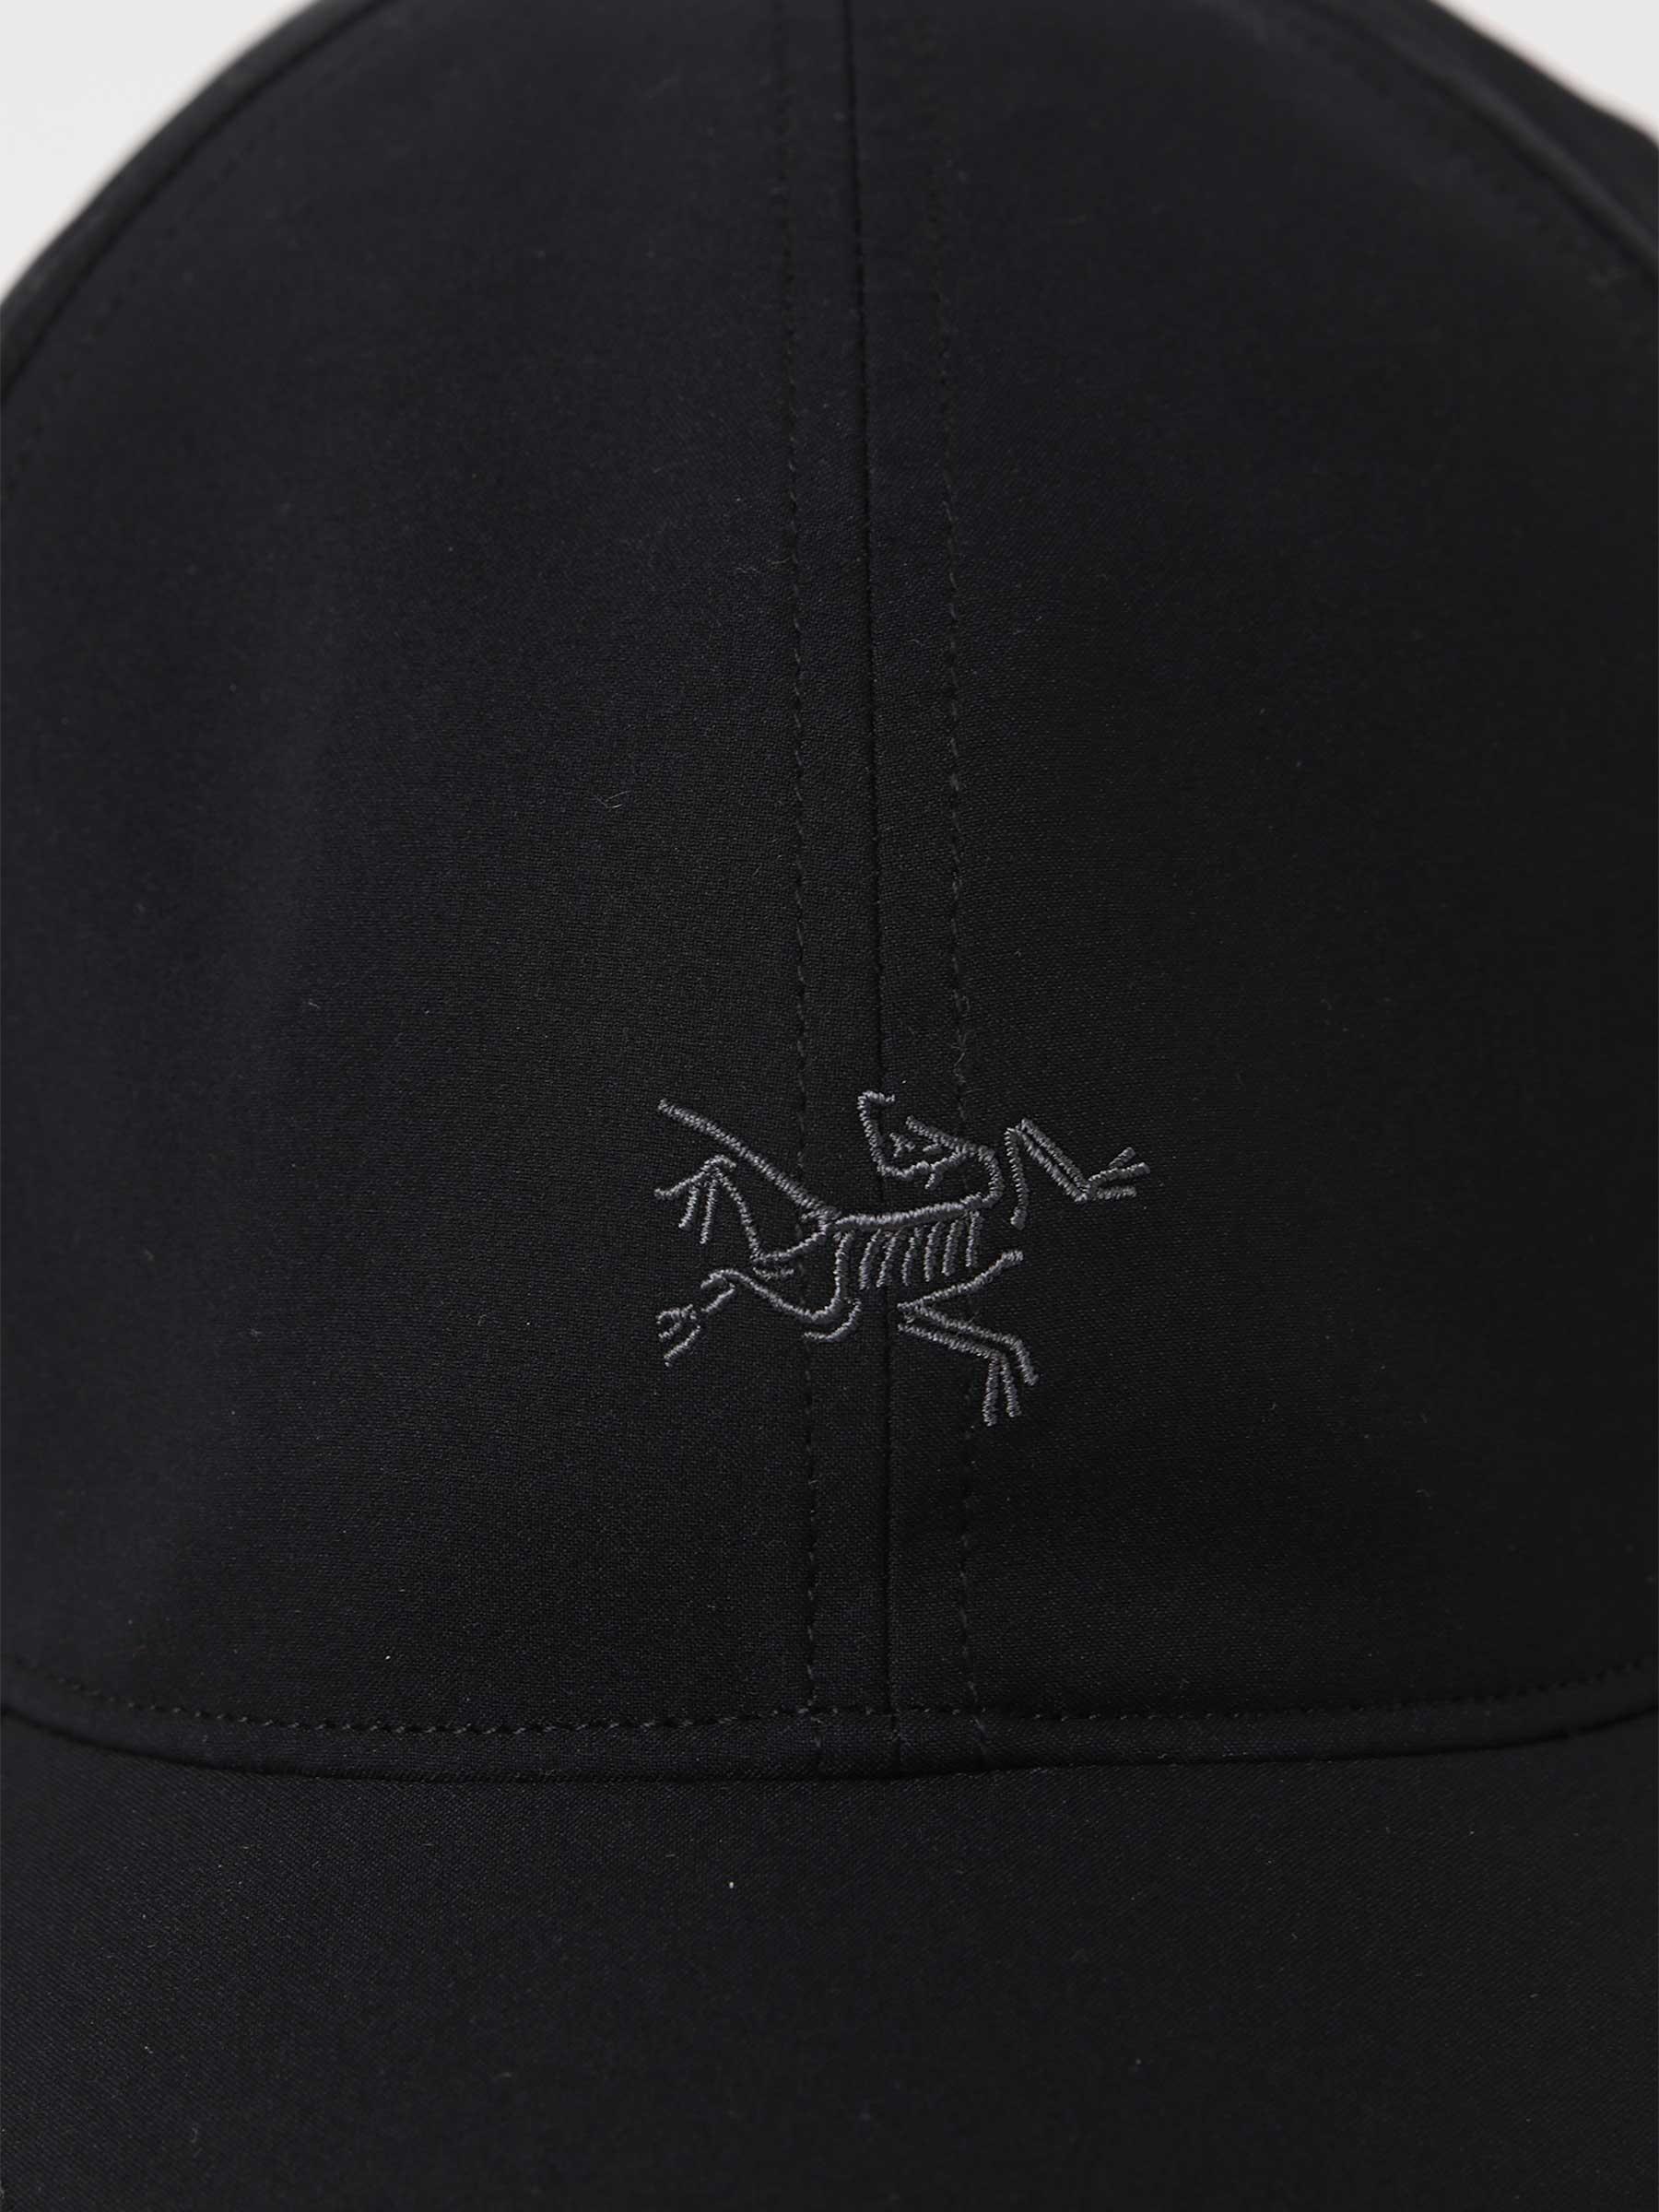 Arc'teryx Small Bird Hat Black - Freshcotton